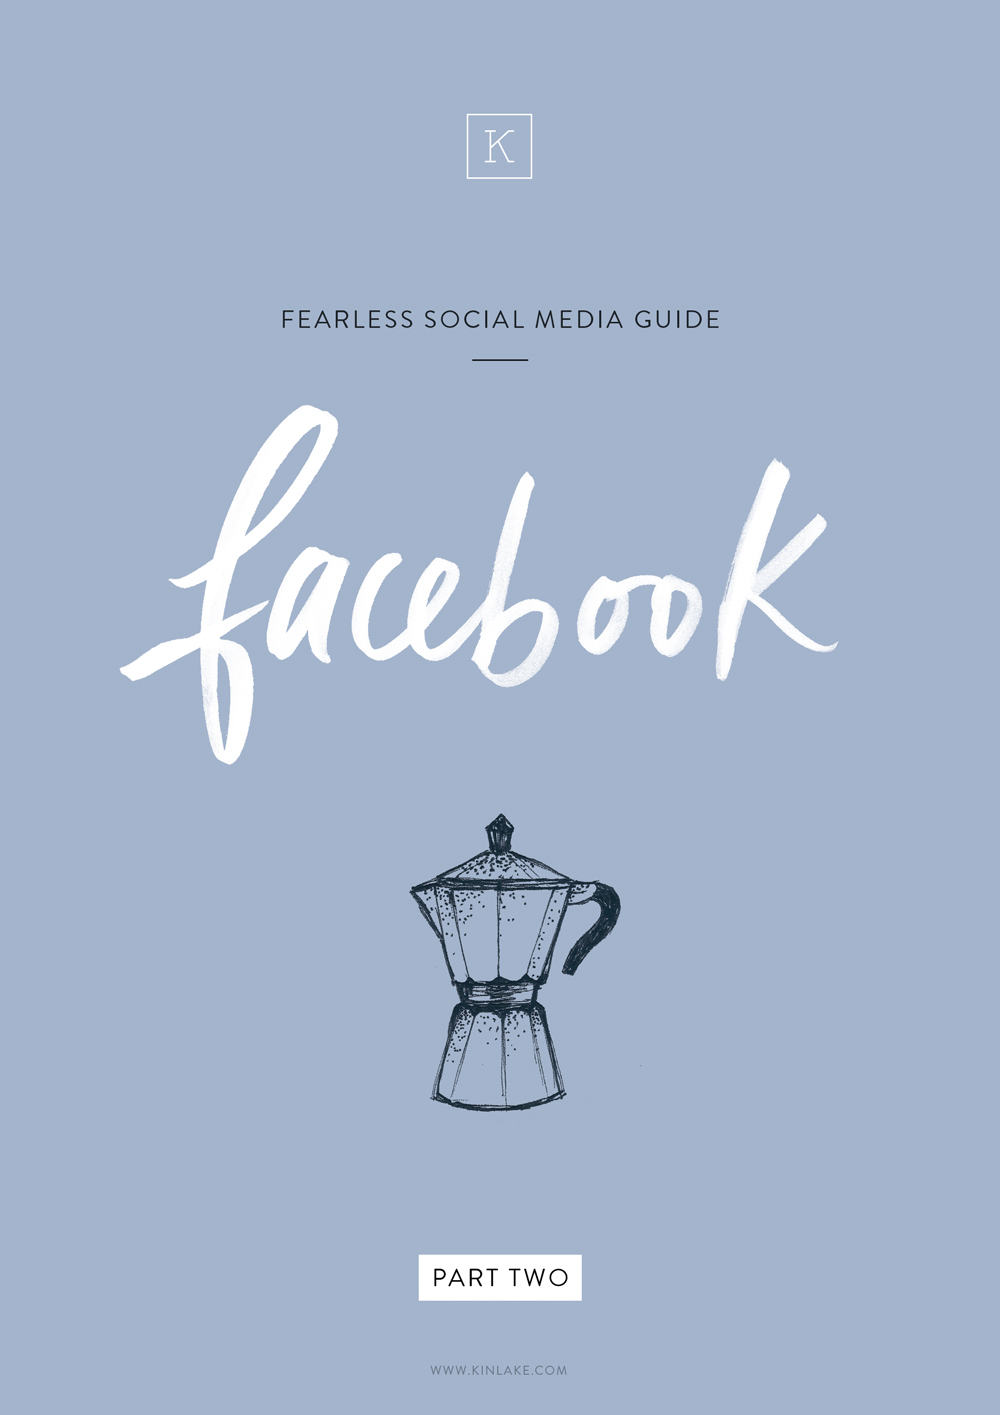 Fearless-social-media-tips-guide-facebook-kinlake-02